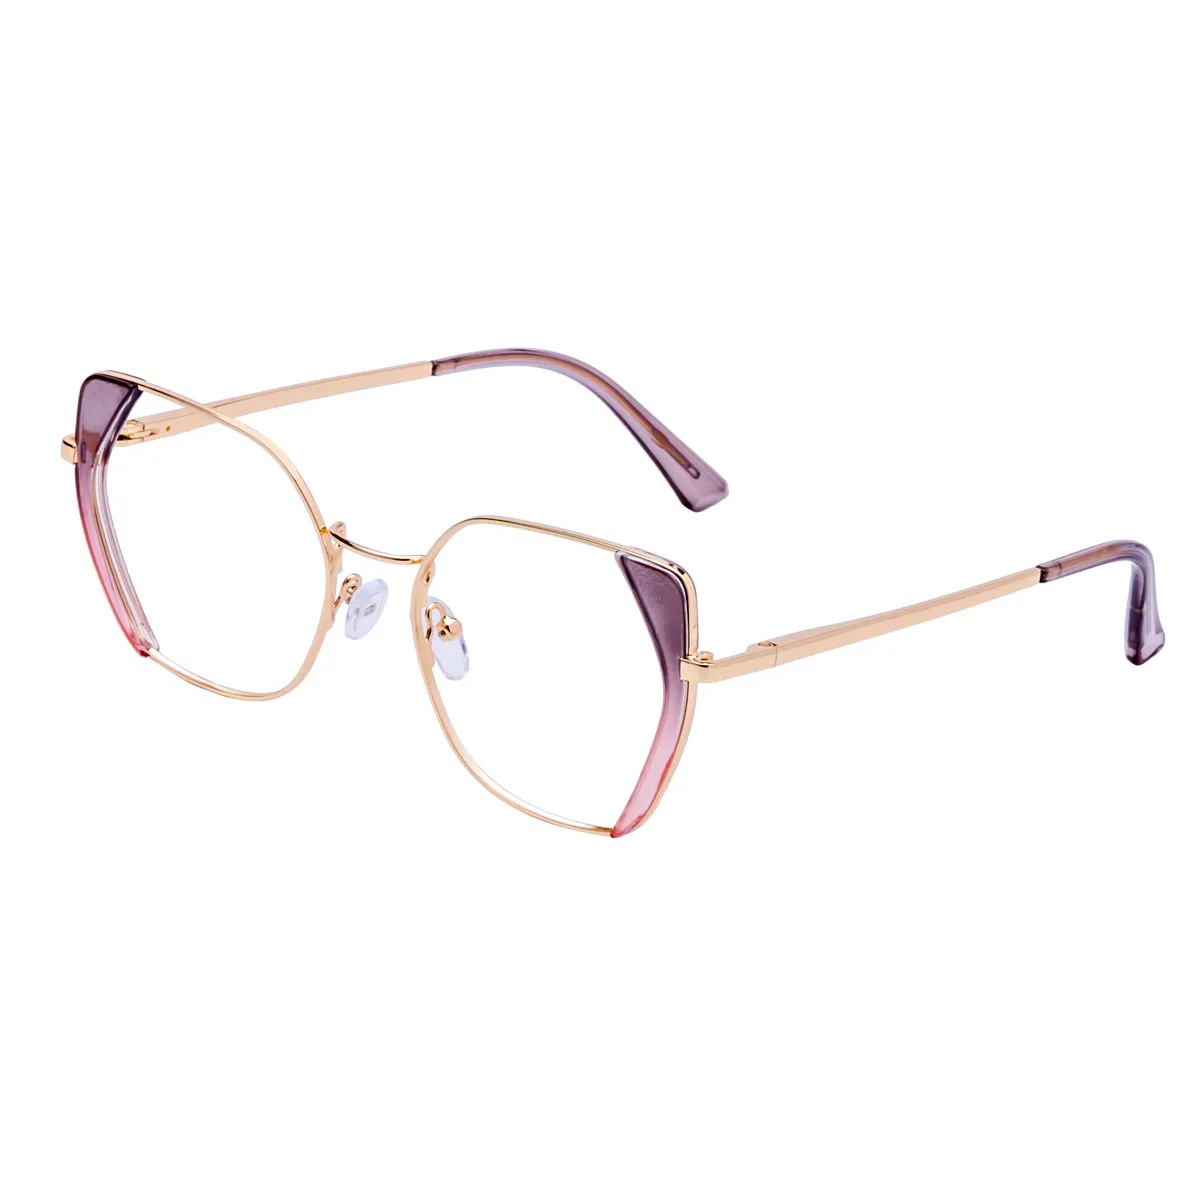 Atlee - Geometric Purple-Pink Glasses for Women